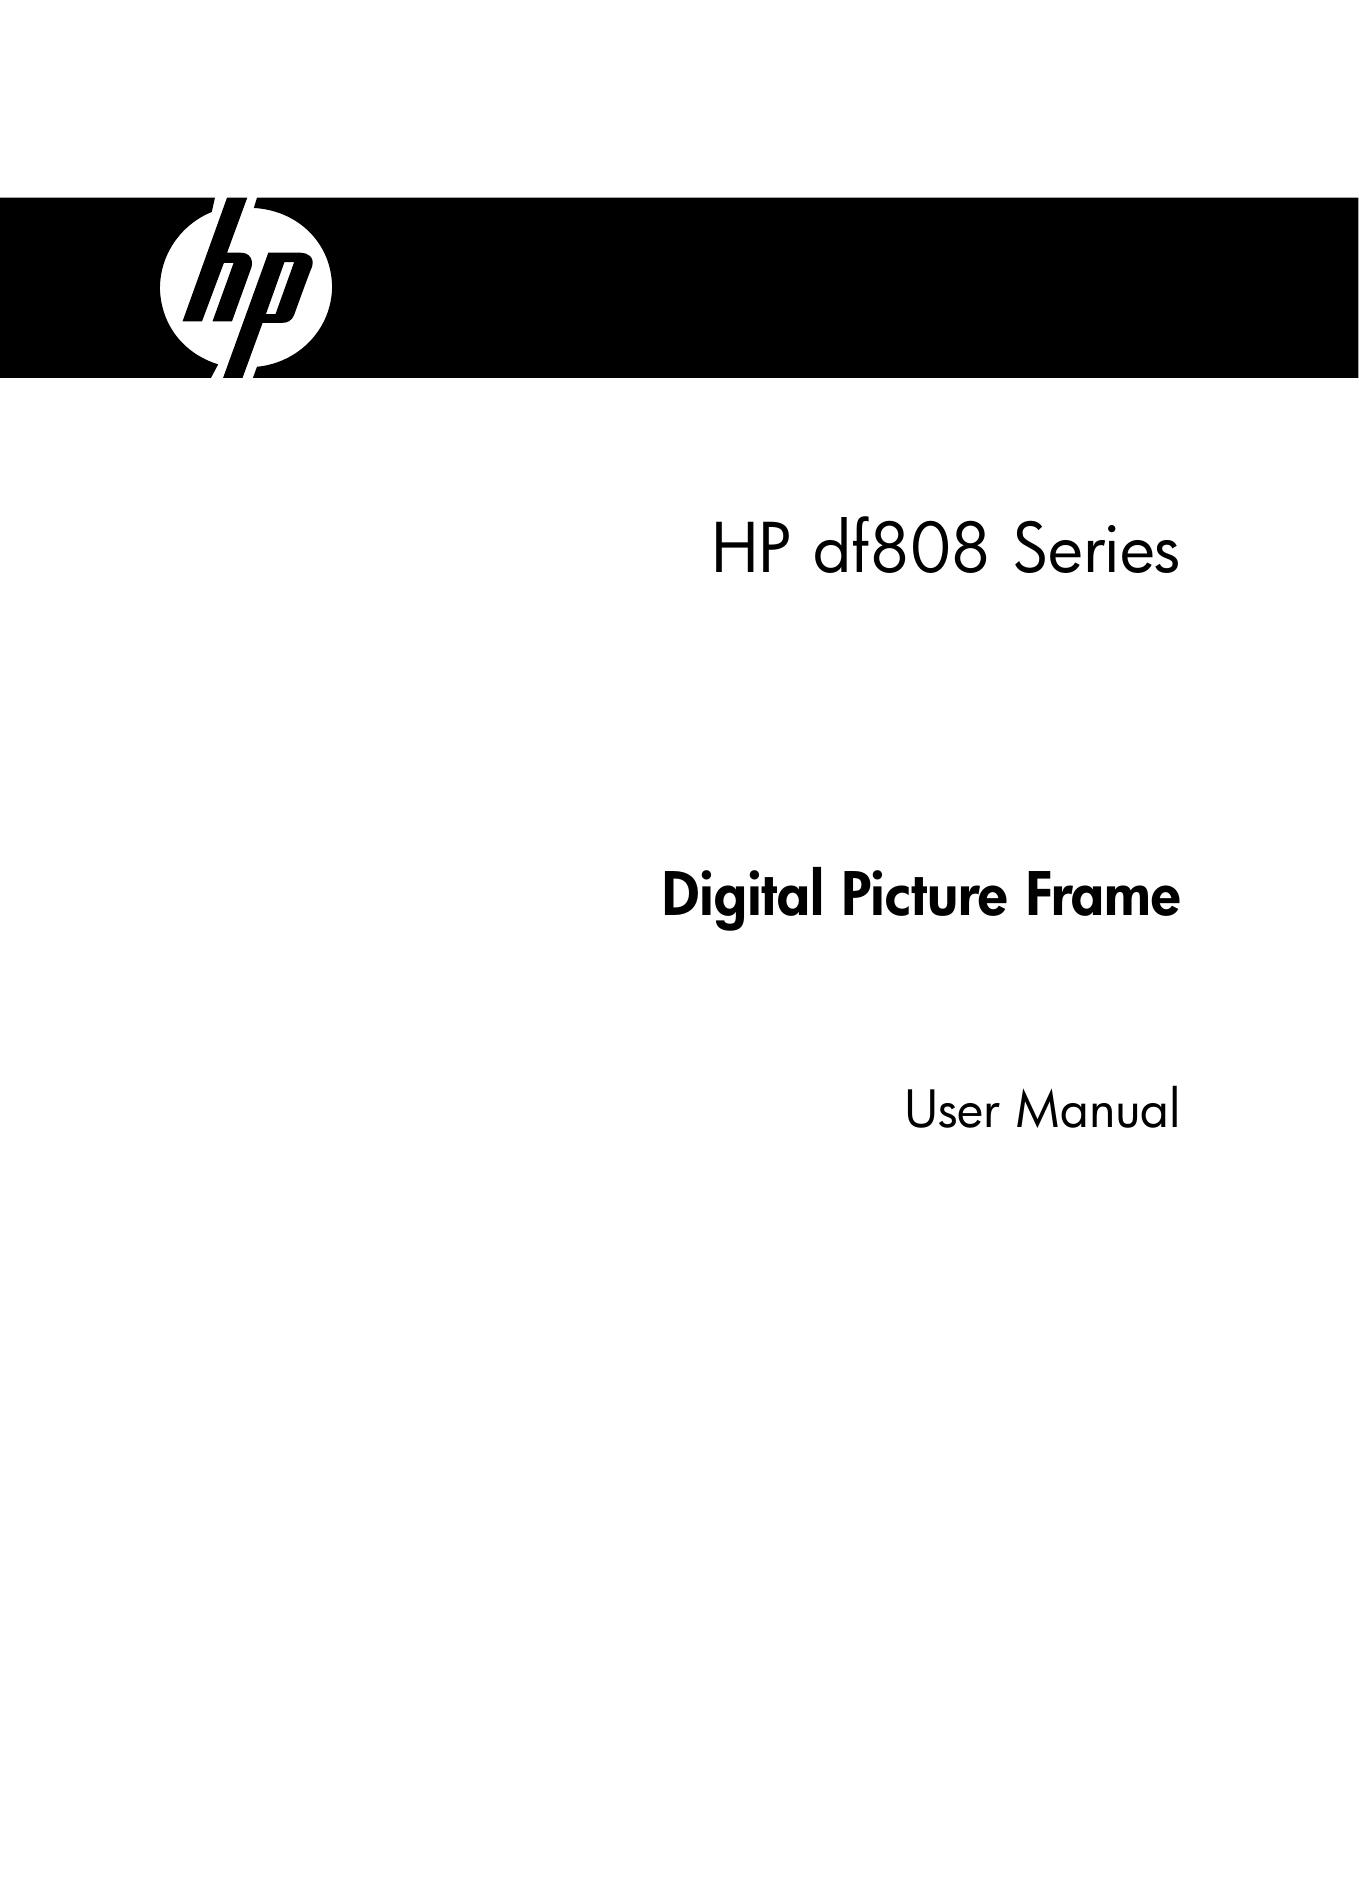 HP (Hewlett-Packard) DF808 Digital Photo Frame User Manual